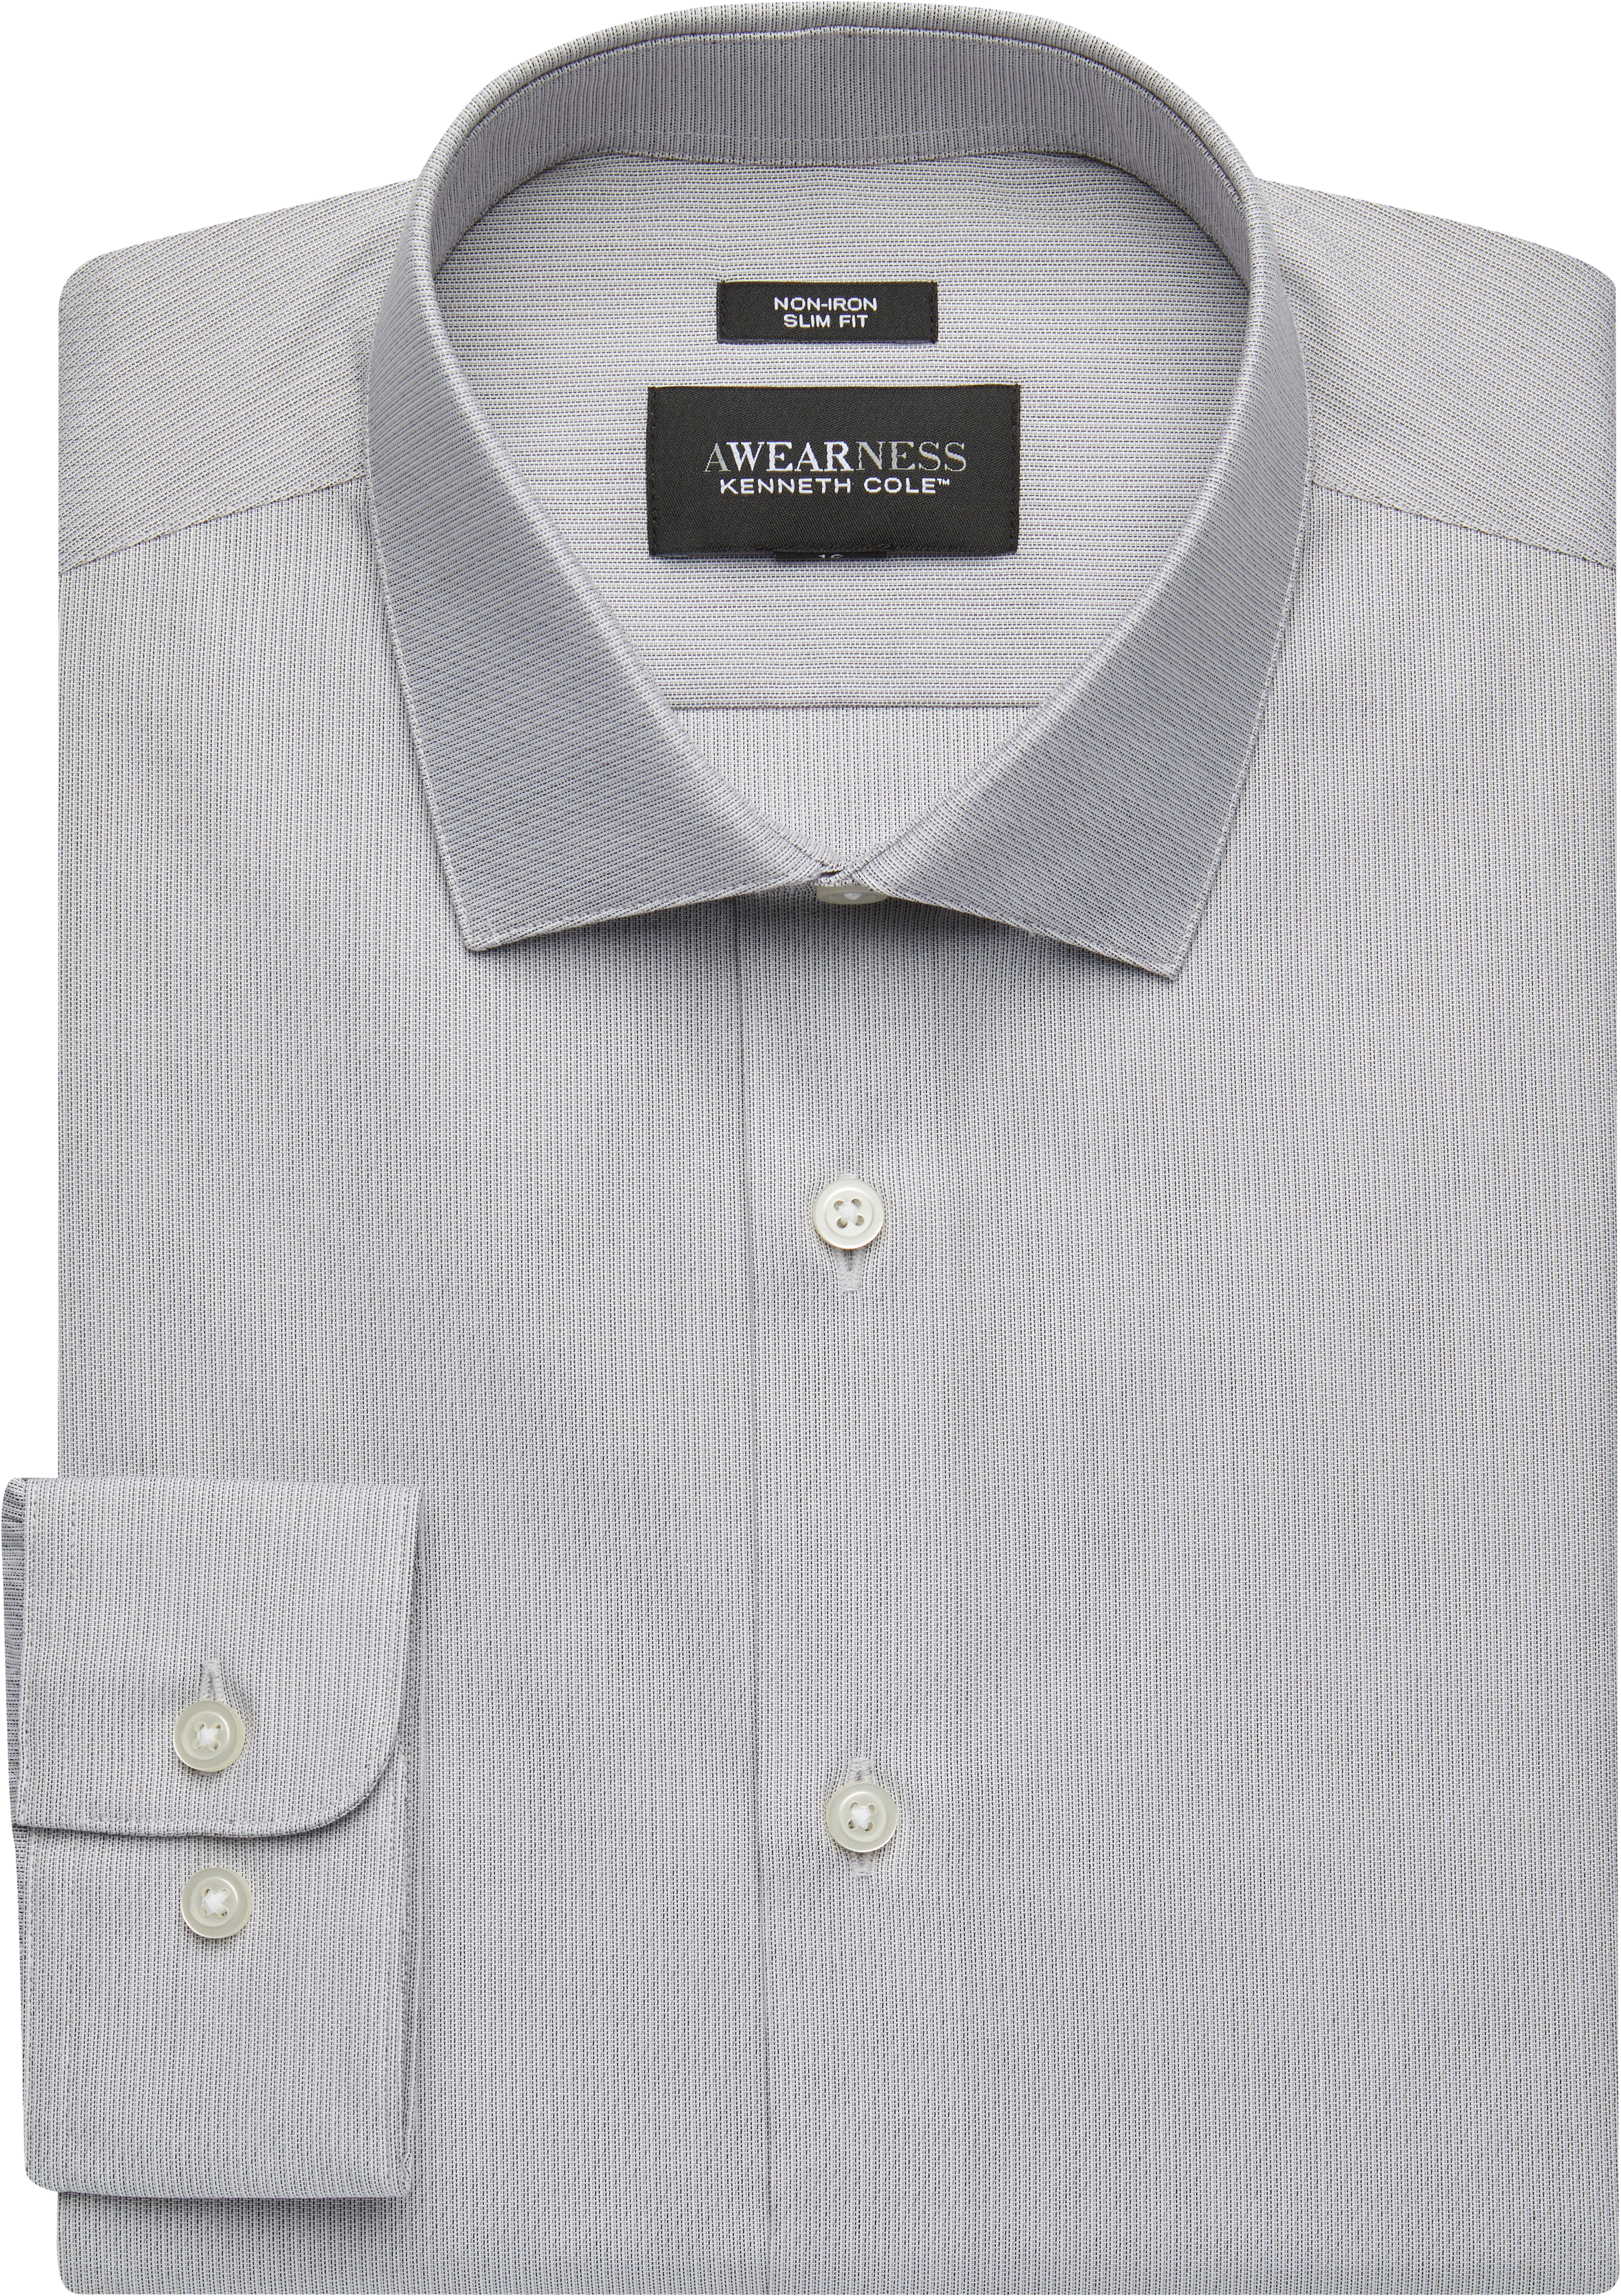 Awearness Kenneth Cole Gray Stripe Slim Fit Dress Shirt - Men's Sale ...